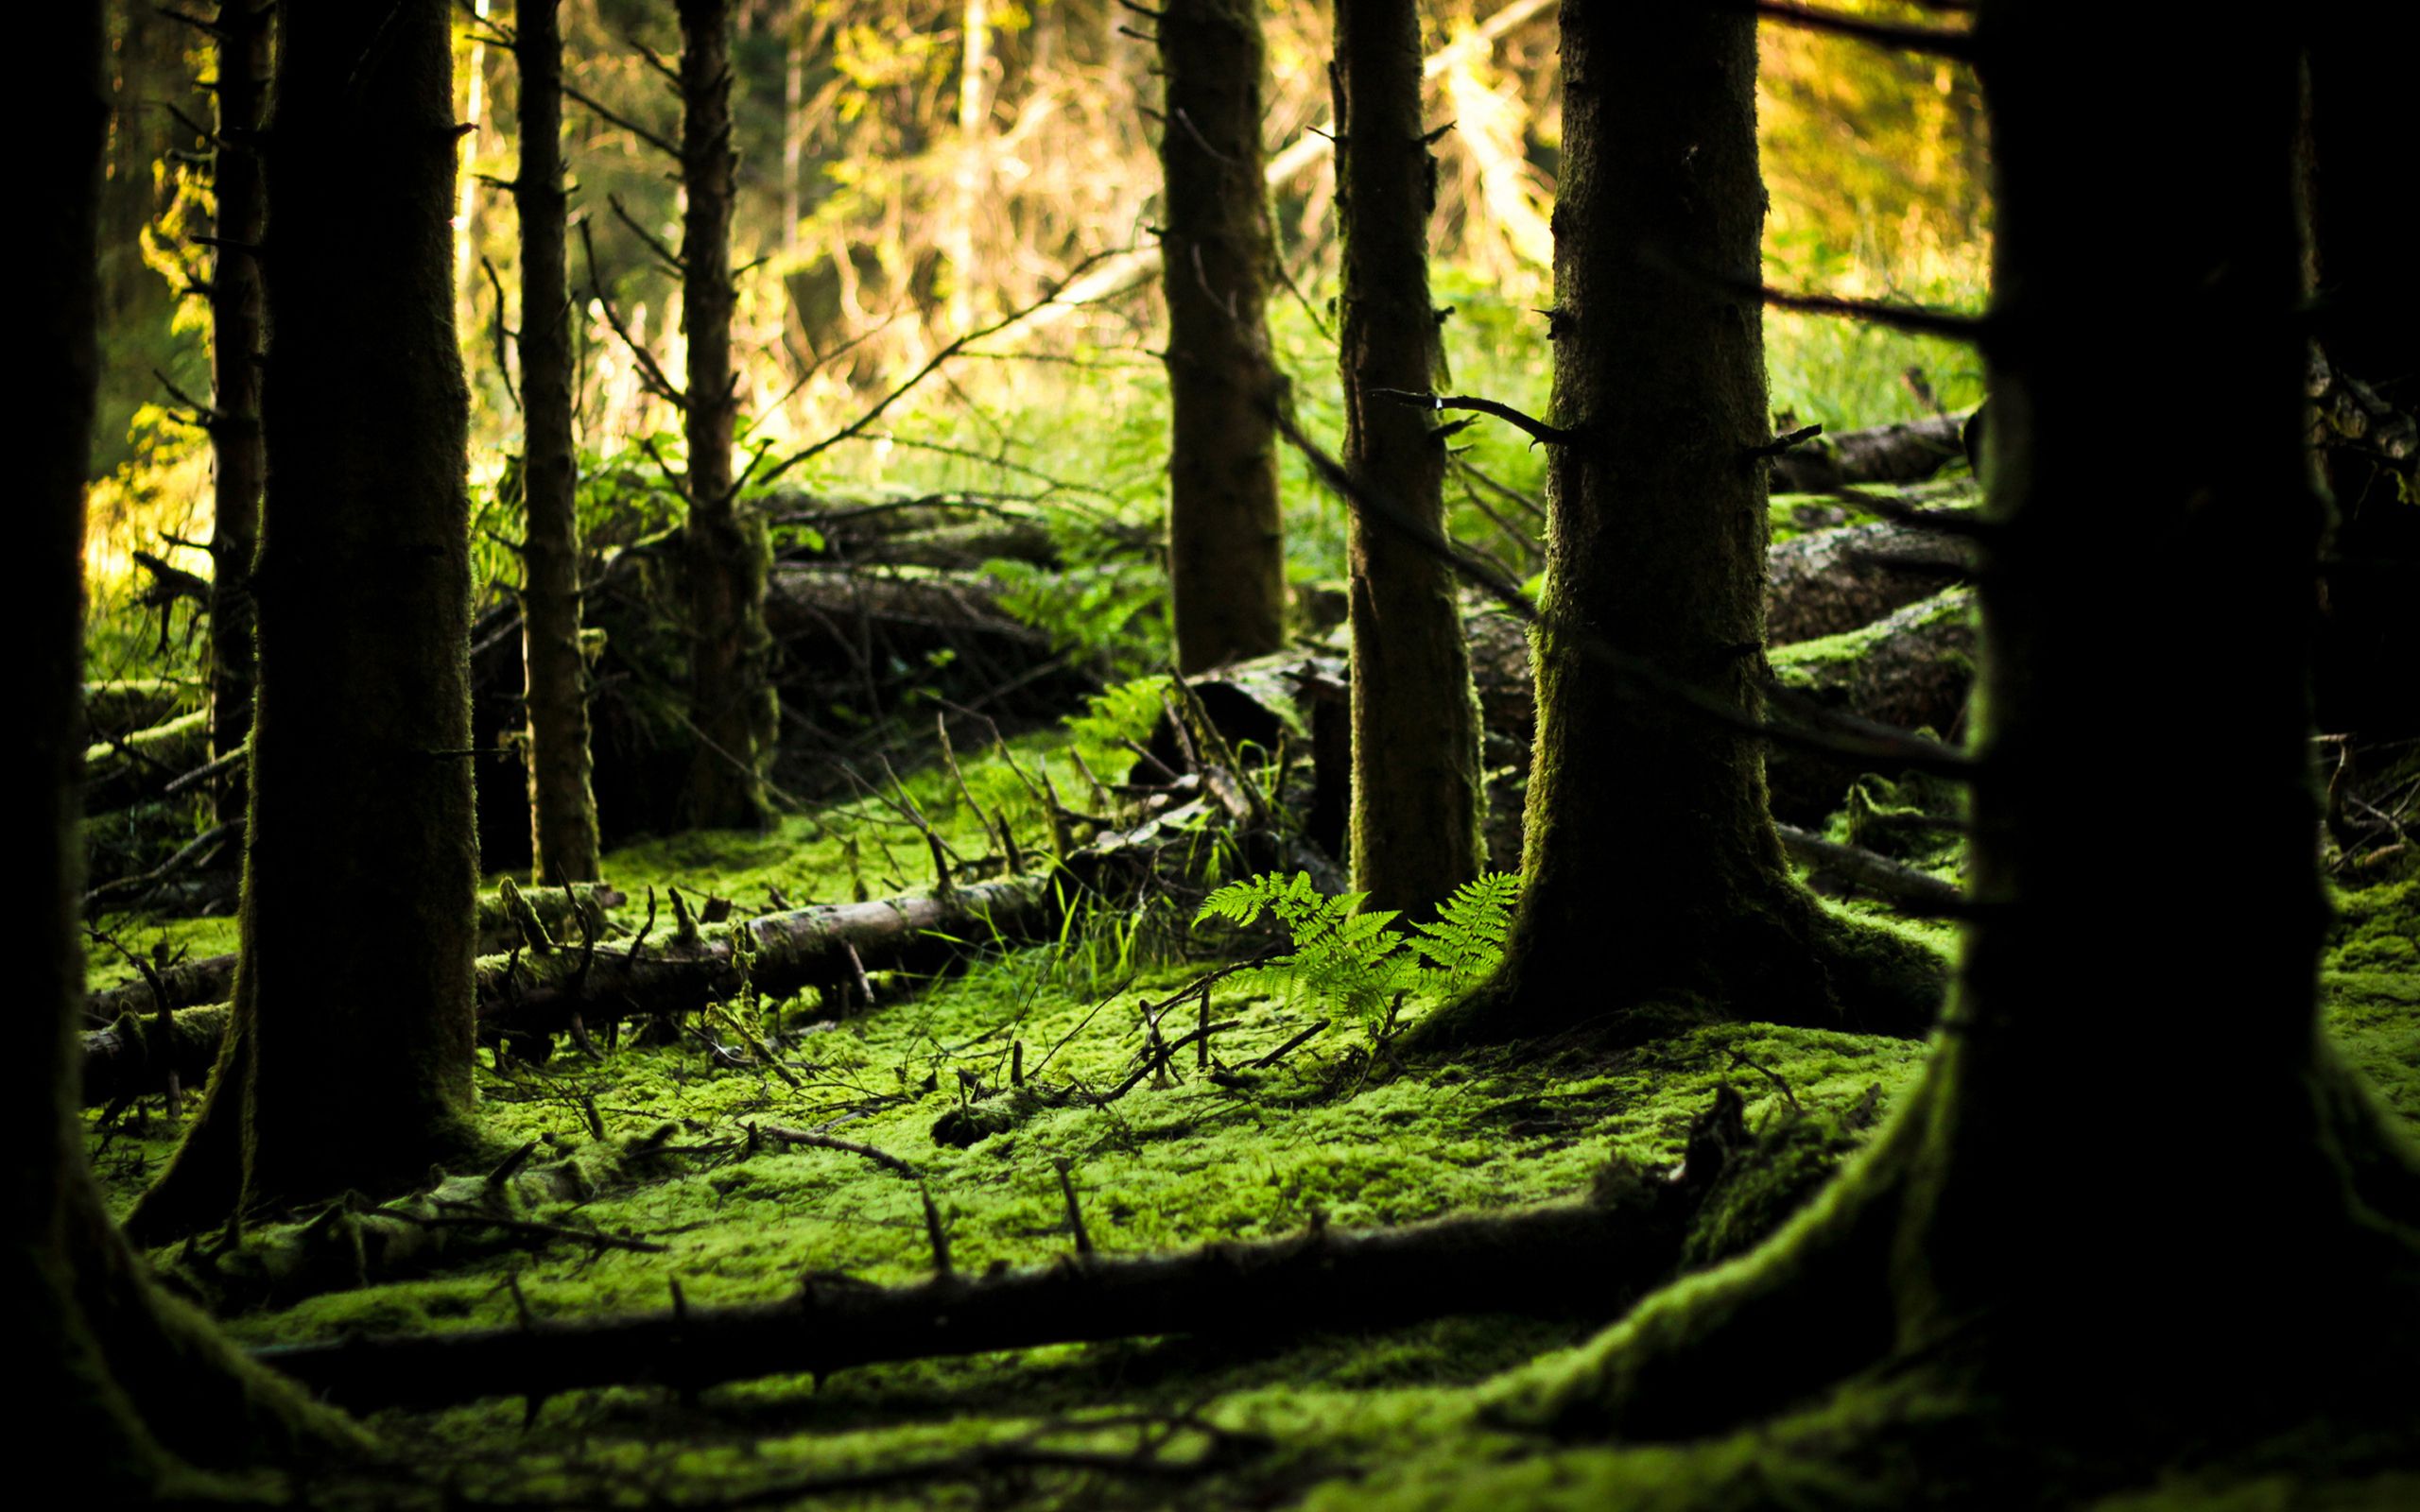 terralonginqua: Green forest floor / nature wallpaper